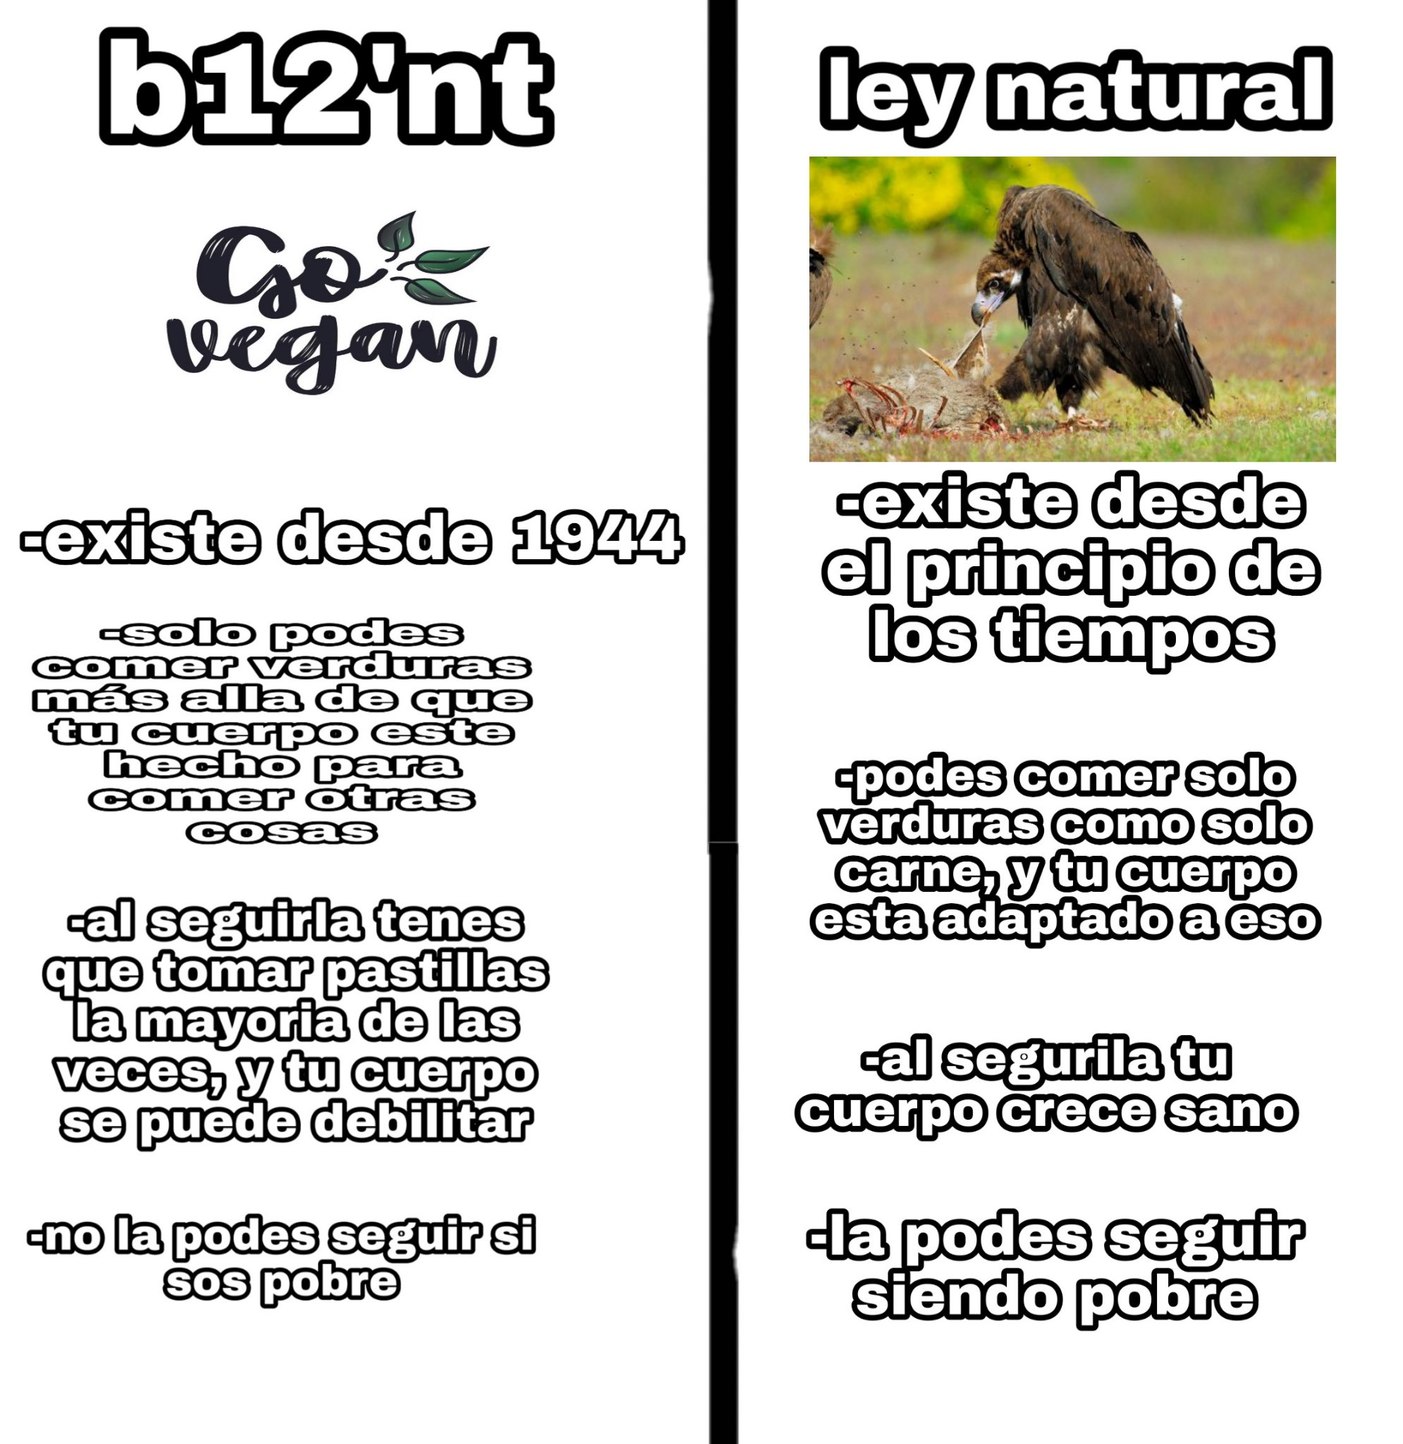 Veganos vs ley natural - meme